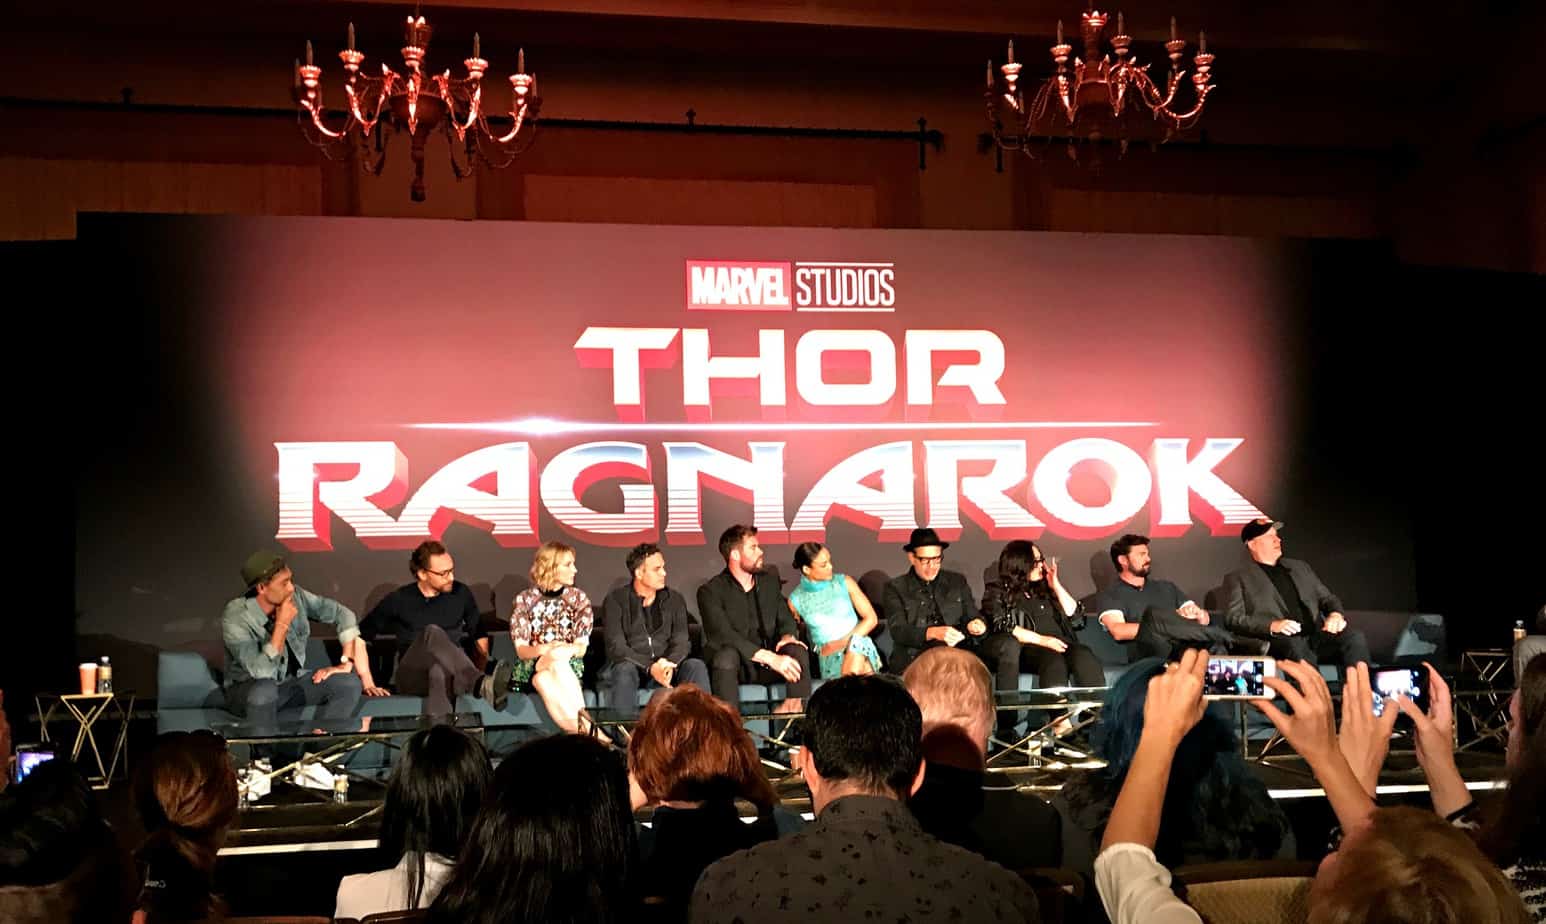 Los Angeles Thor: Ragnarok Press Conference recap and experience.